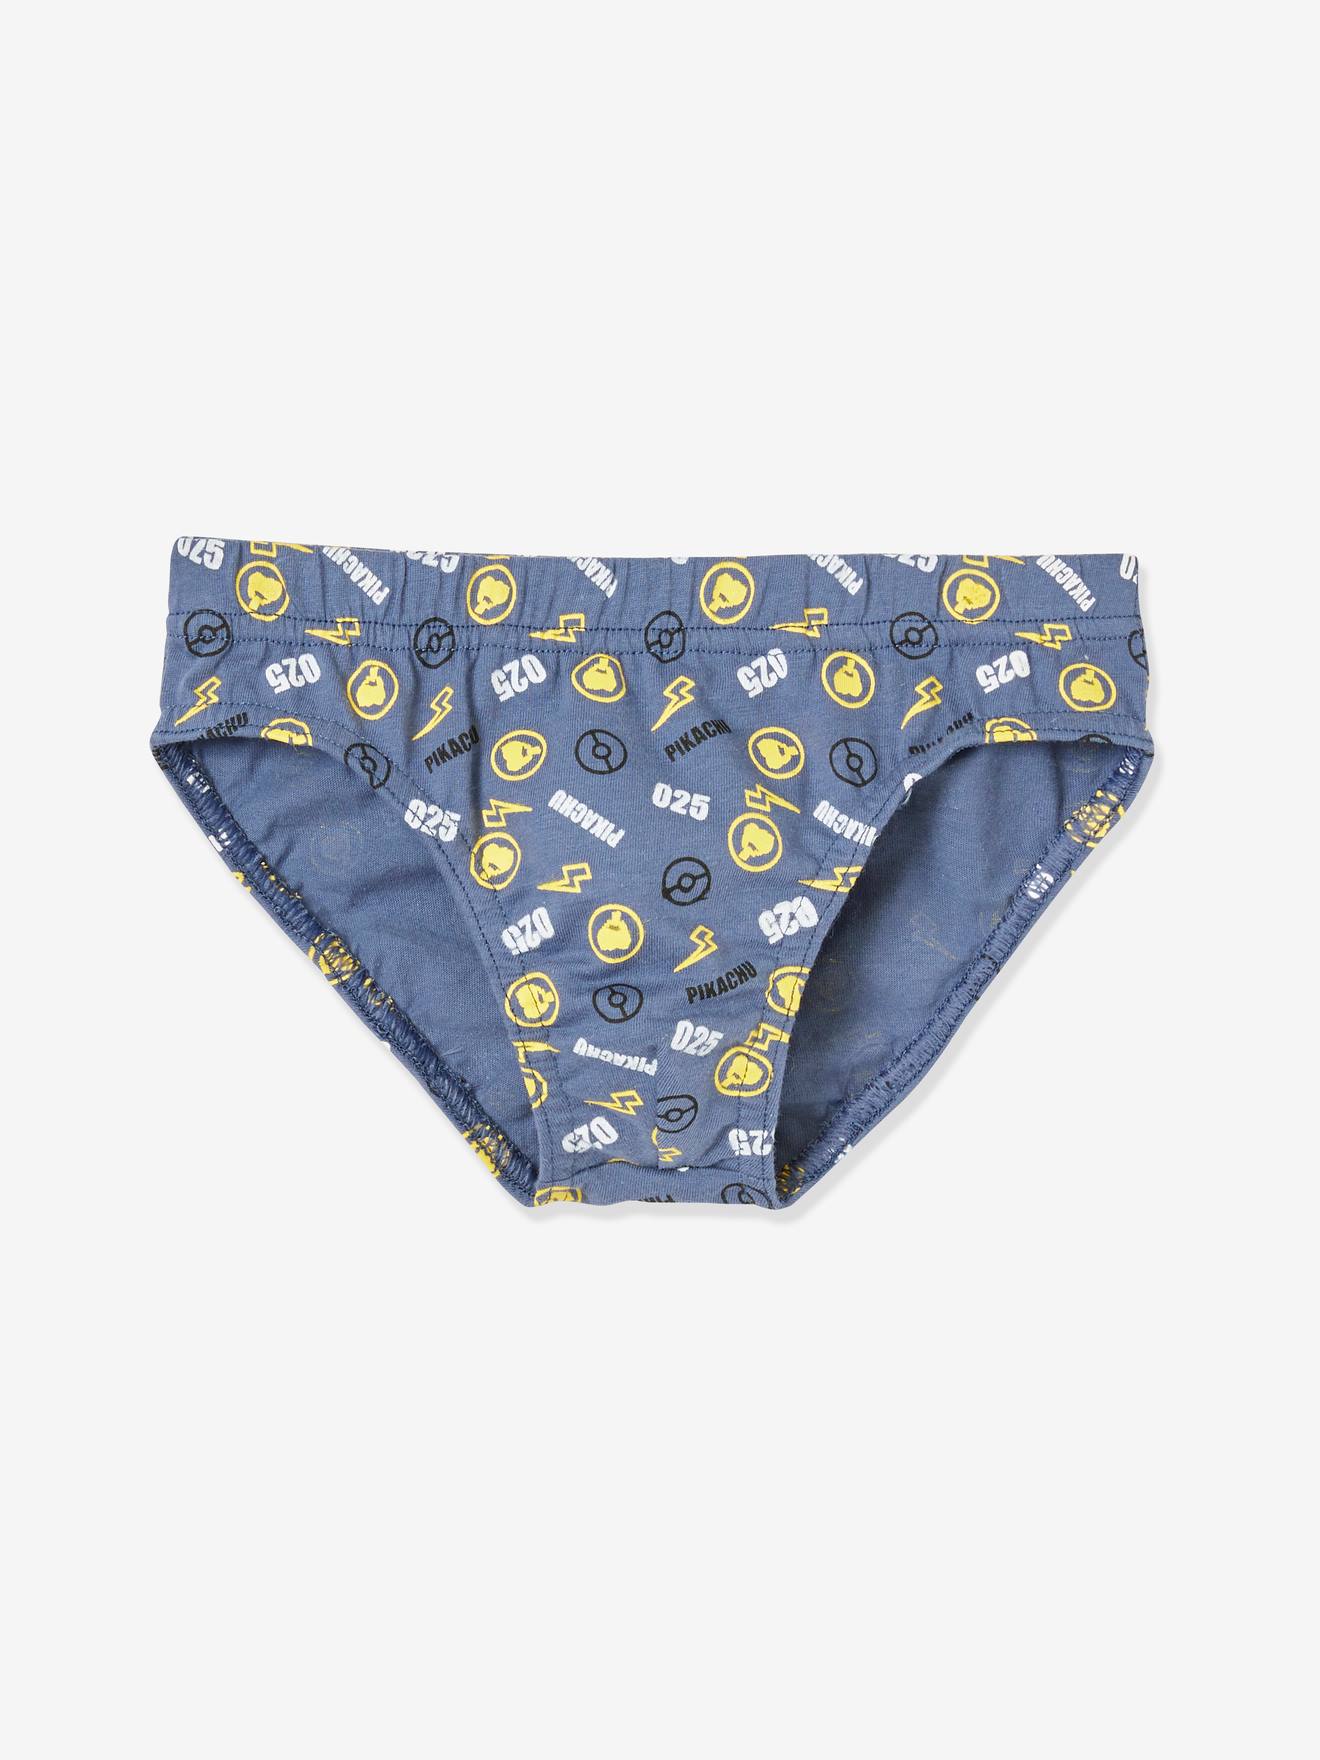 Pokémon underwear